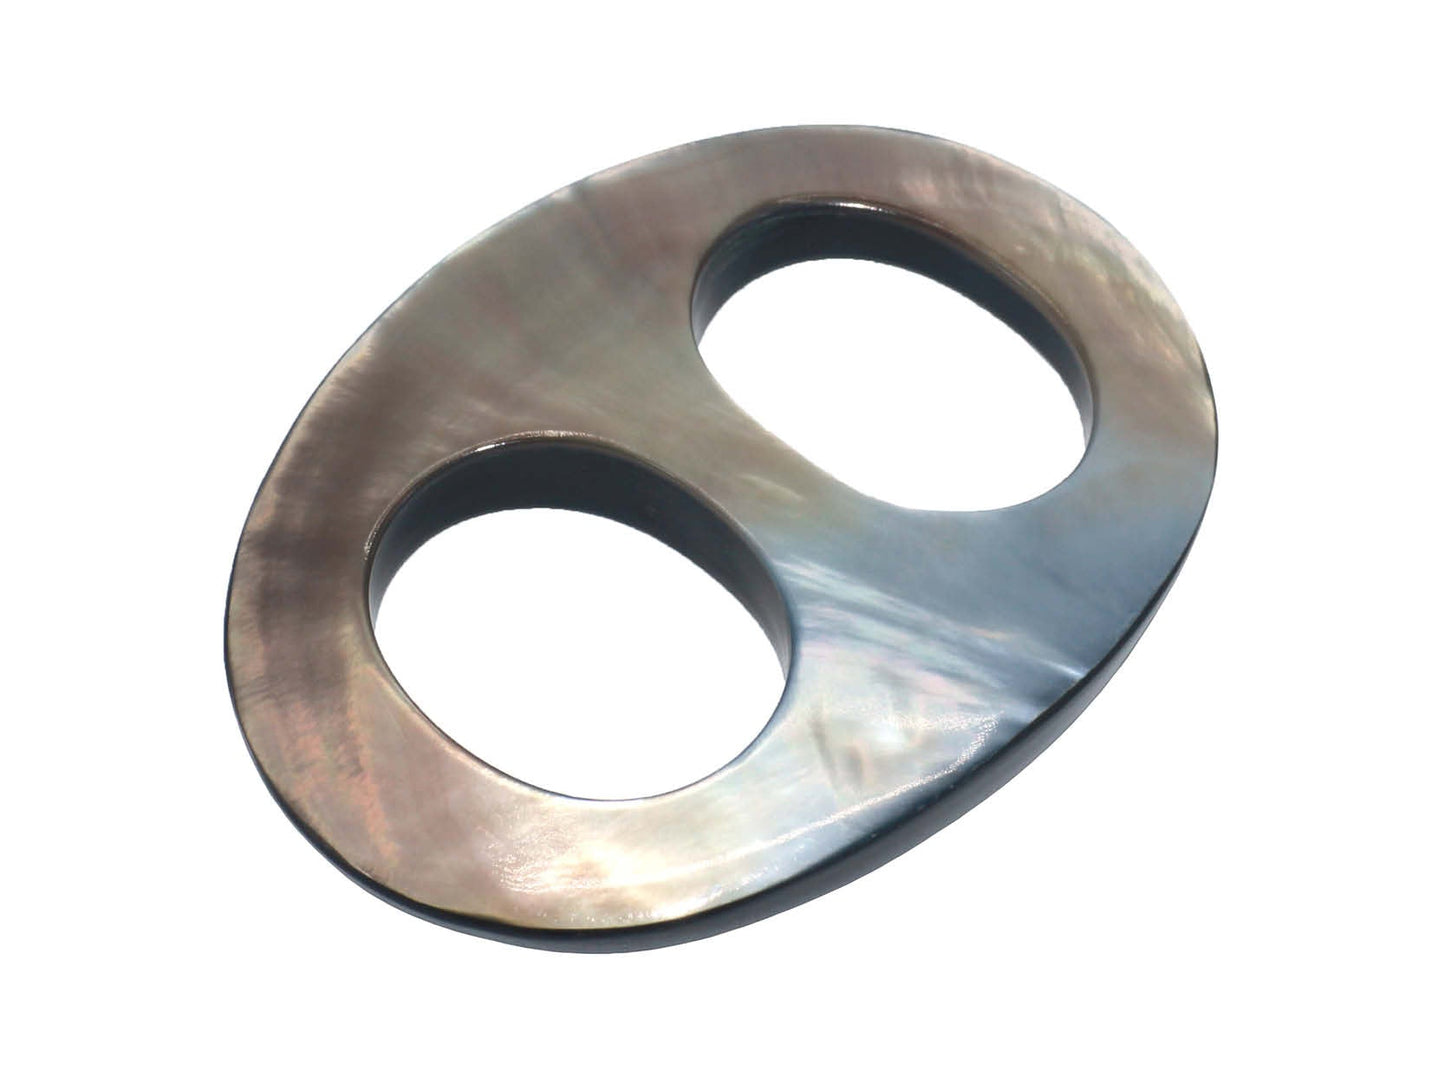 Paua Shell Scarf Ring - Large